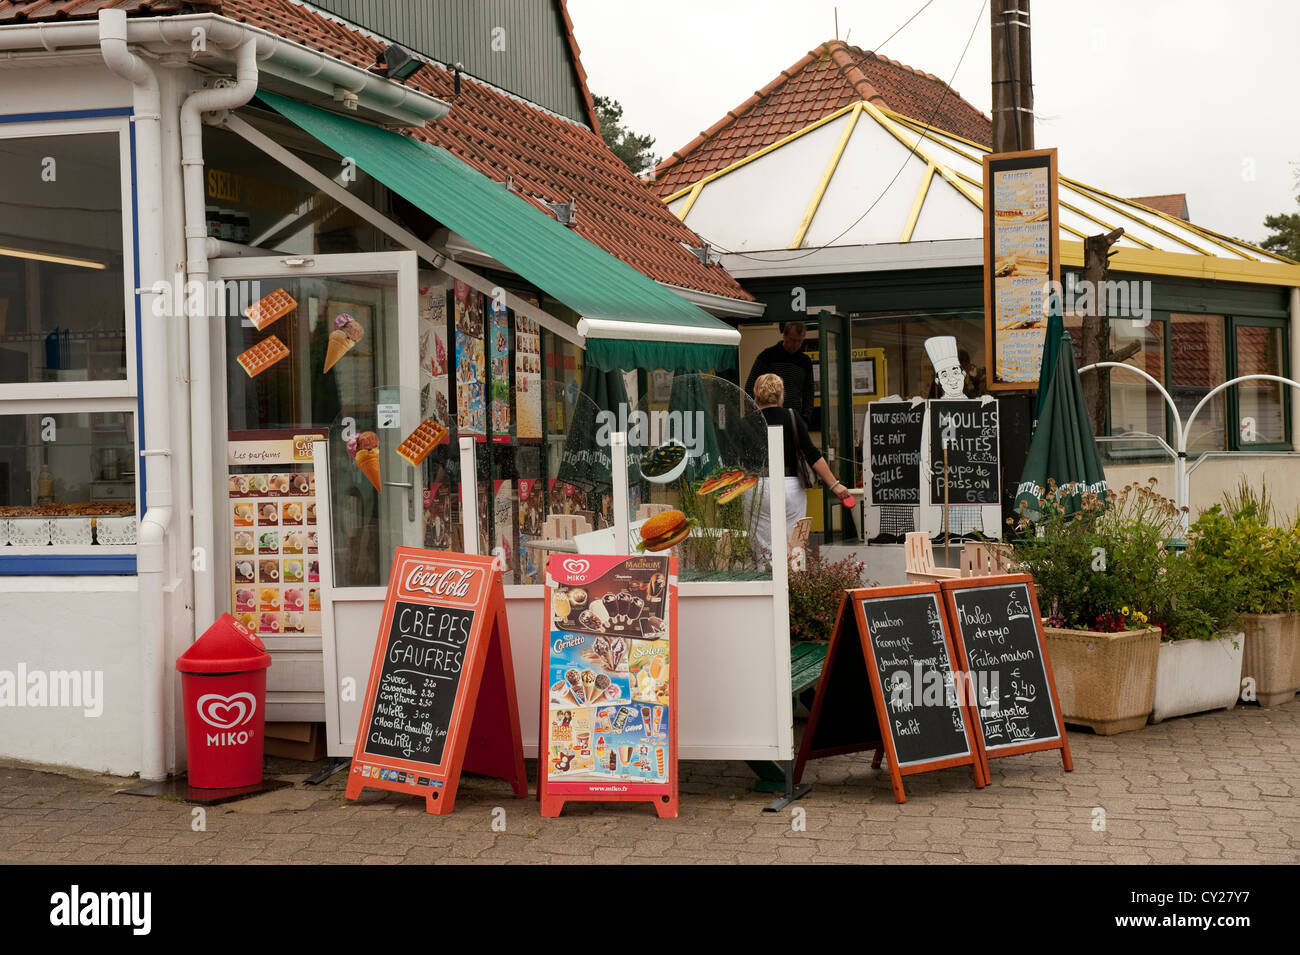 Strand-Shop Eis Crepes Wissant Frankreich Europa Stockfoto